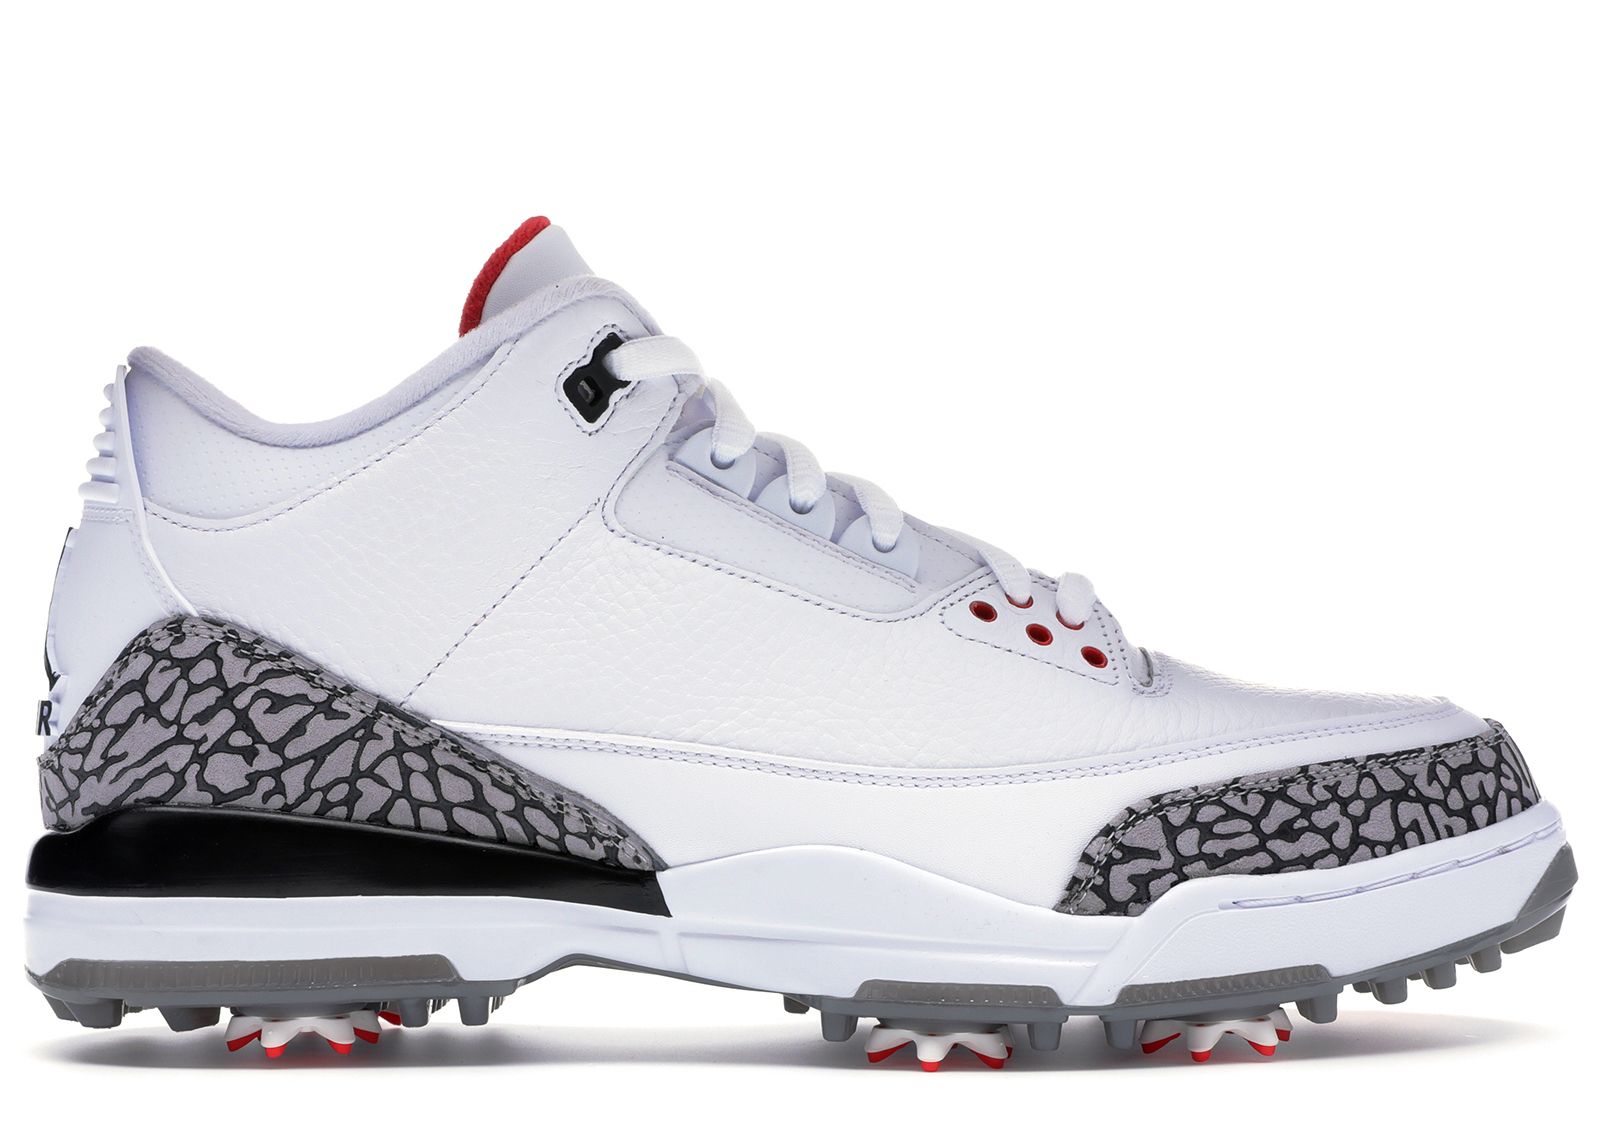 Jordan 3 Retro Golf White Cement | StockX